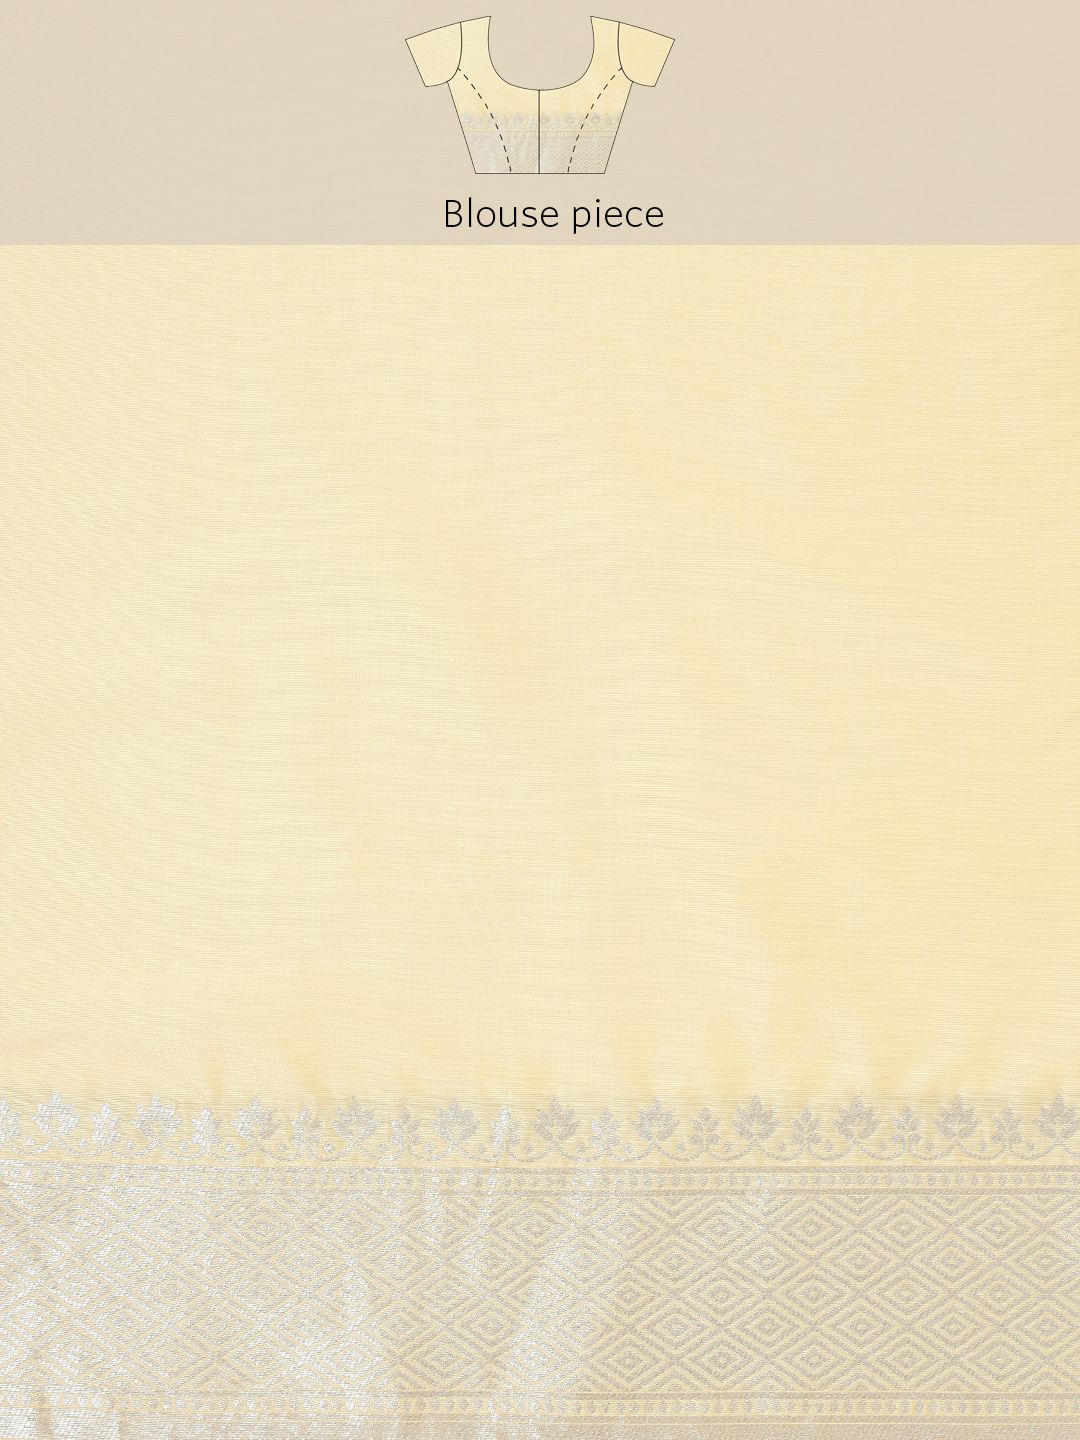 White Toned Partywear Banarasi Silk Saree Color Ful Meenakari Woven Design And Designer Rich Pallu